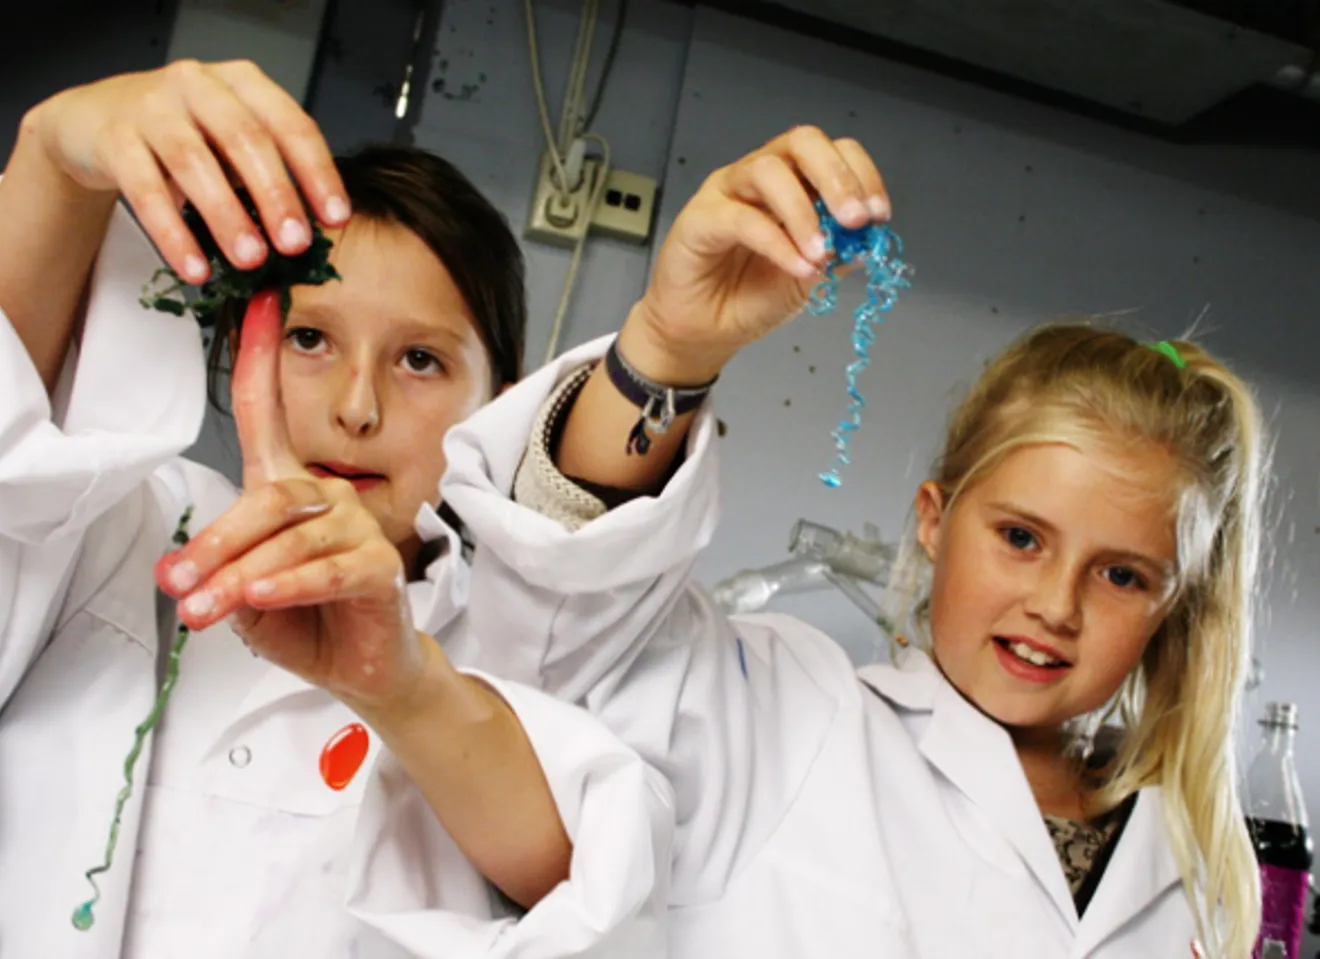 Forskerfabrikken barn som forskere